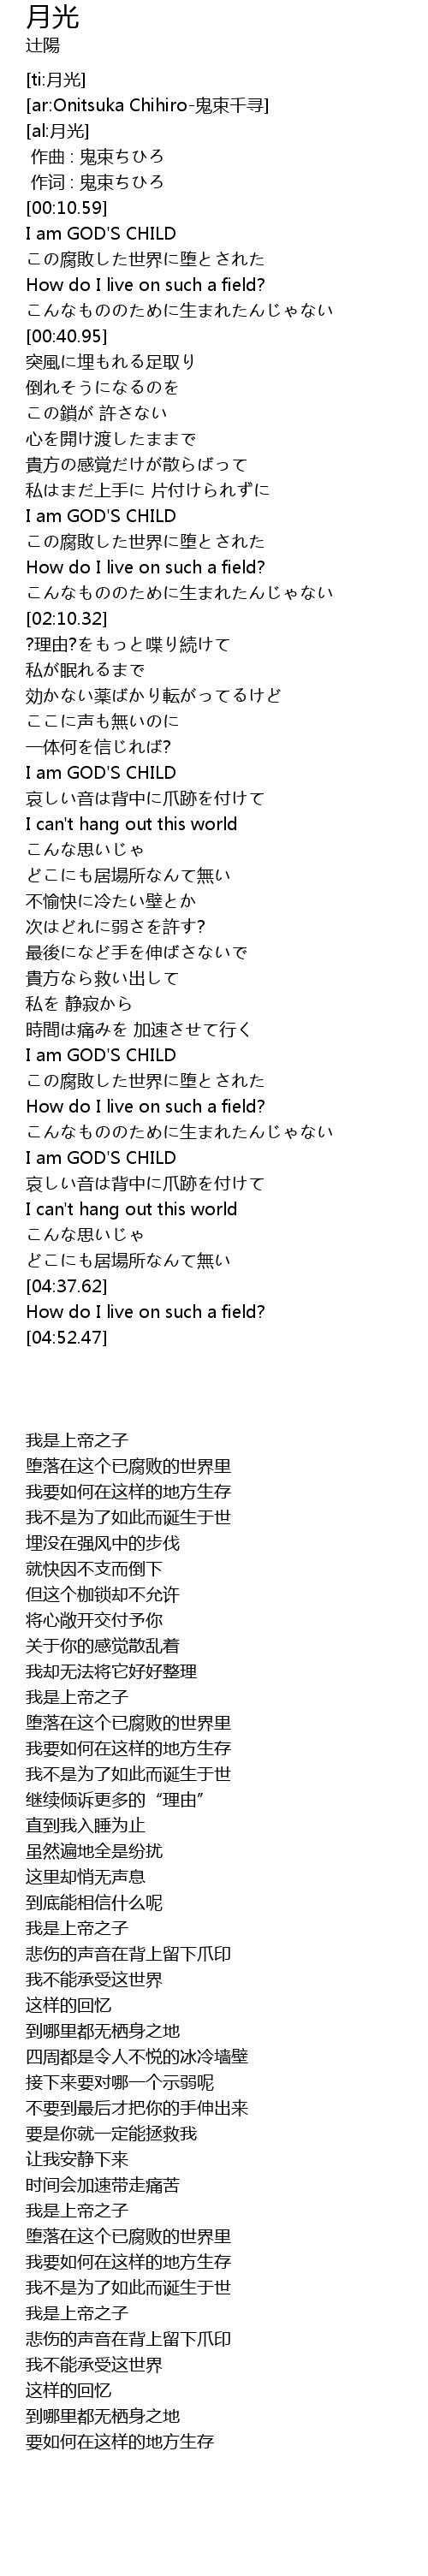 月光 Yue Guang Lyrics Follow Lyrics